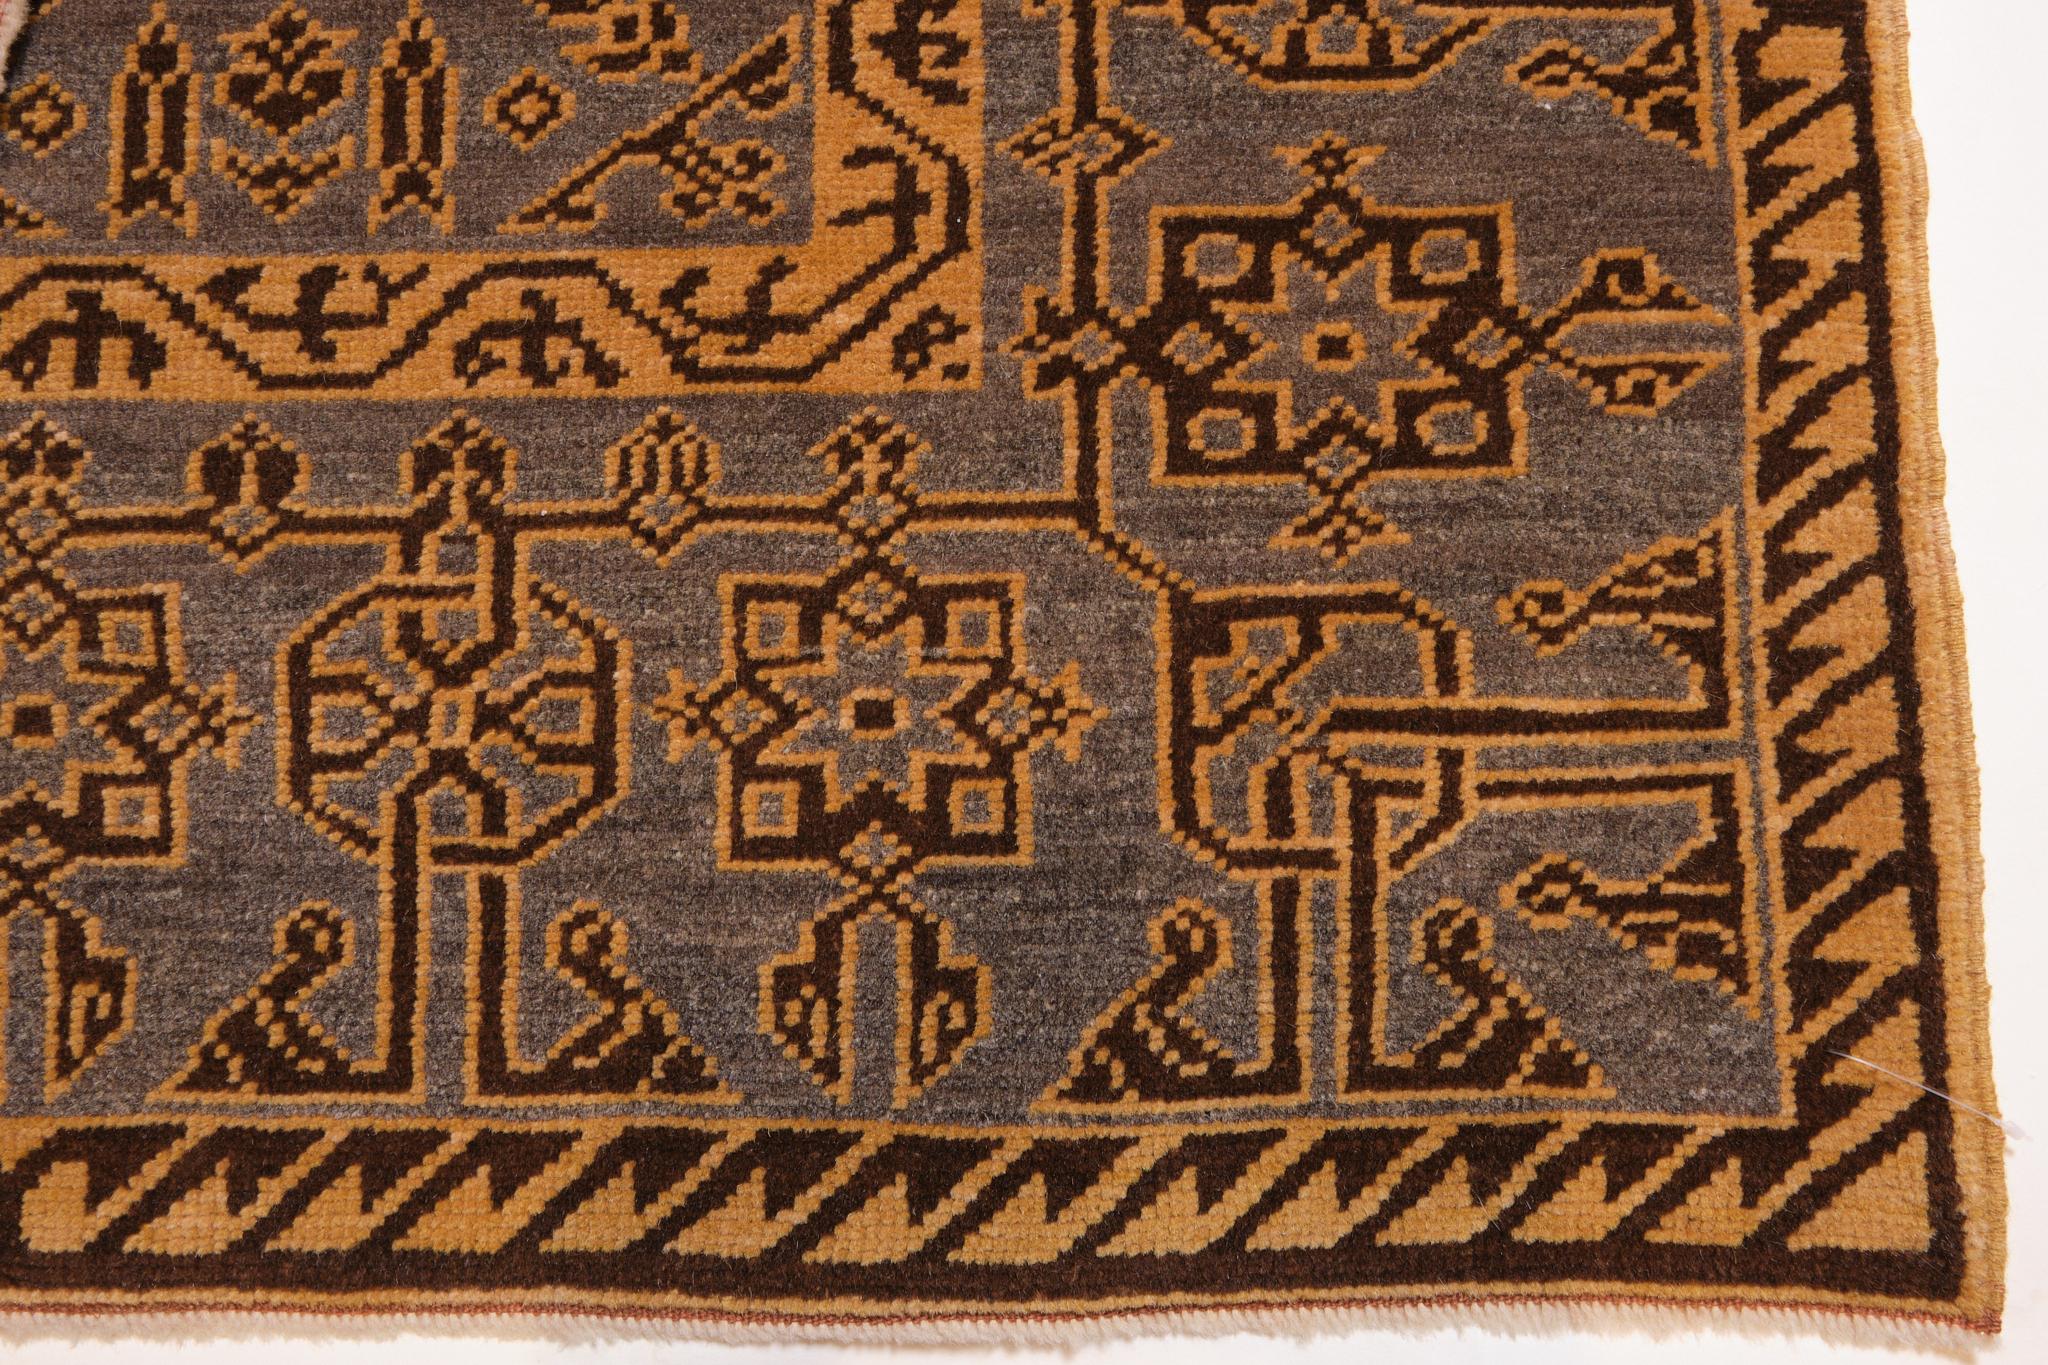 Turkish Ararat Rugs The Divrigi Ulu Mosque Carpet Anatolian Revival Rug, Natural Dyed For Sale